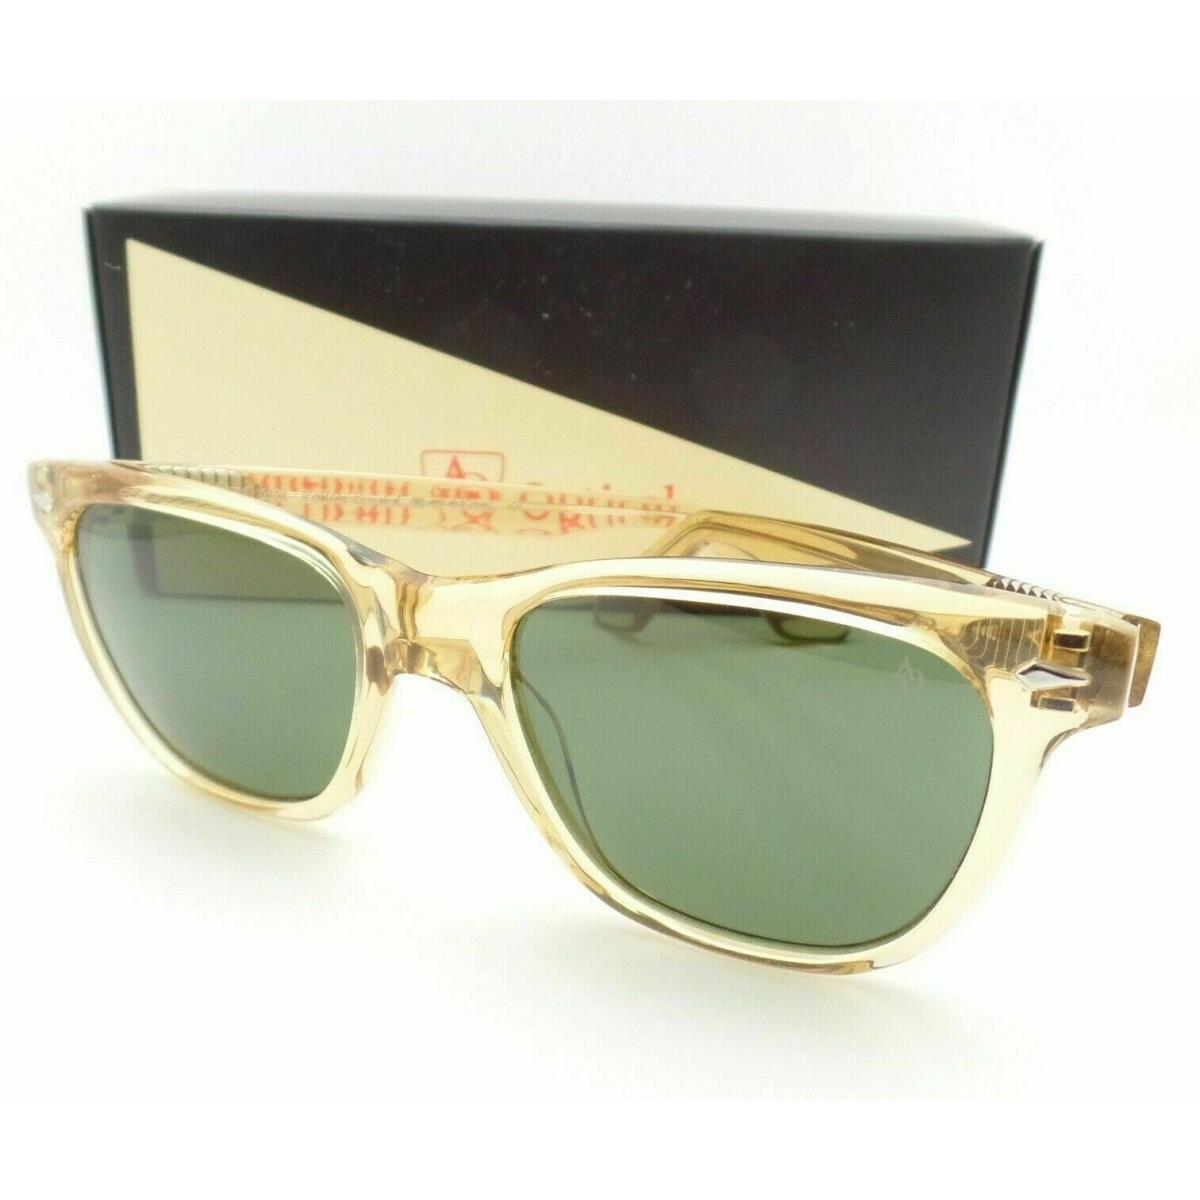 AO American Optical Saratoga 2 Yellow Green Sunglasses Polar or Frame Only